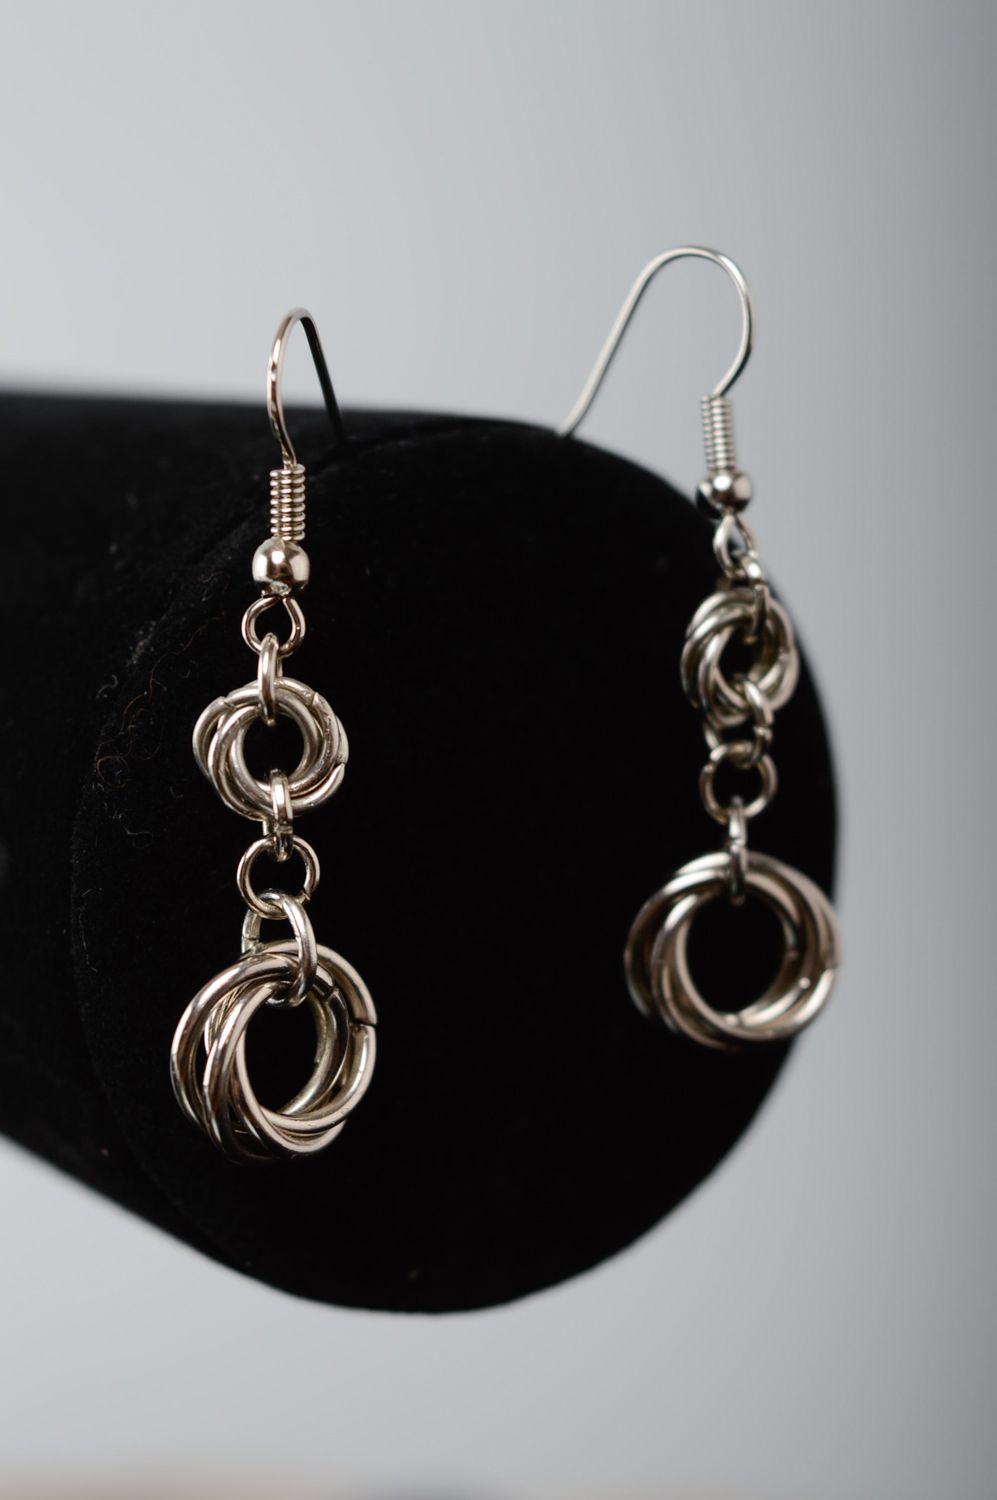 Handmade metal earrings created using chain armor weaving technique photo 1